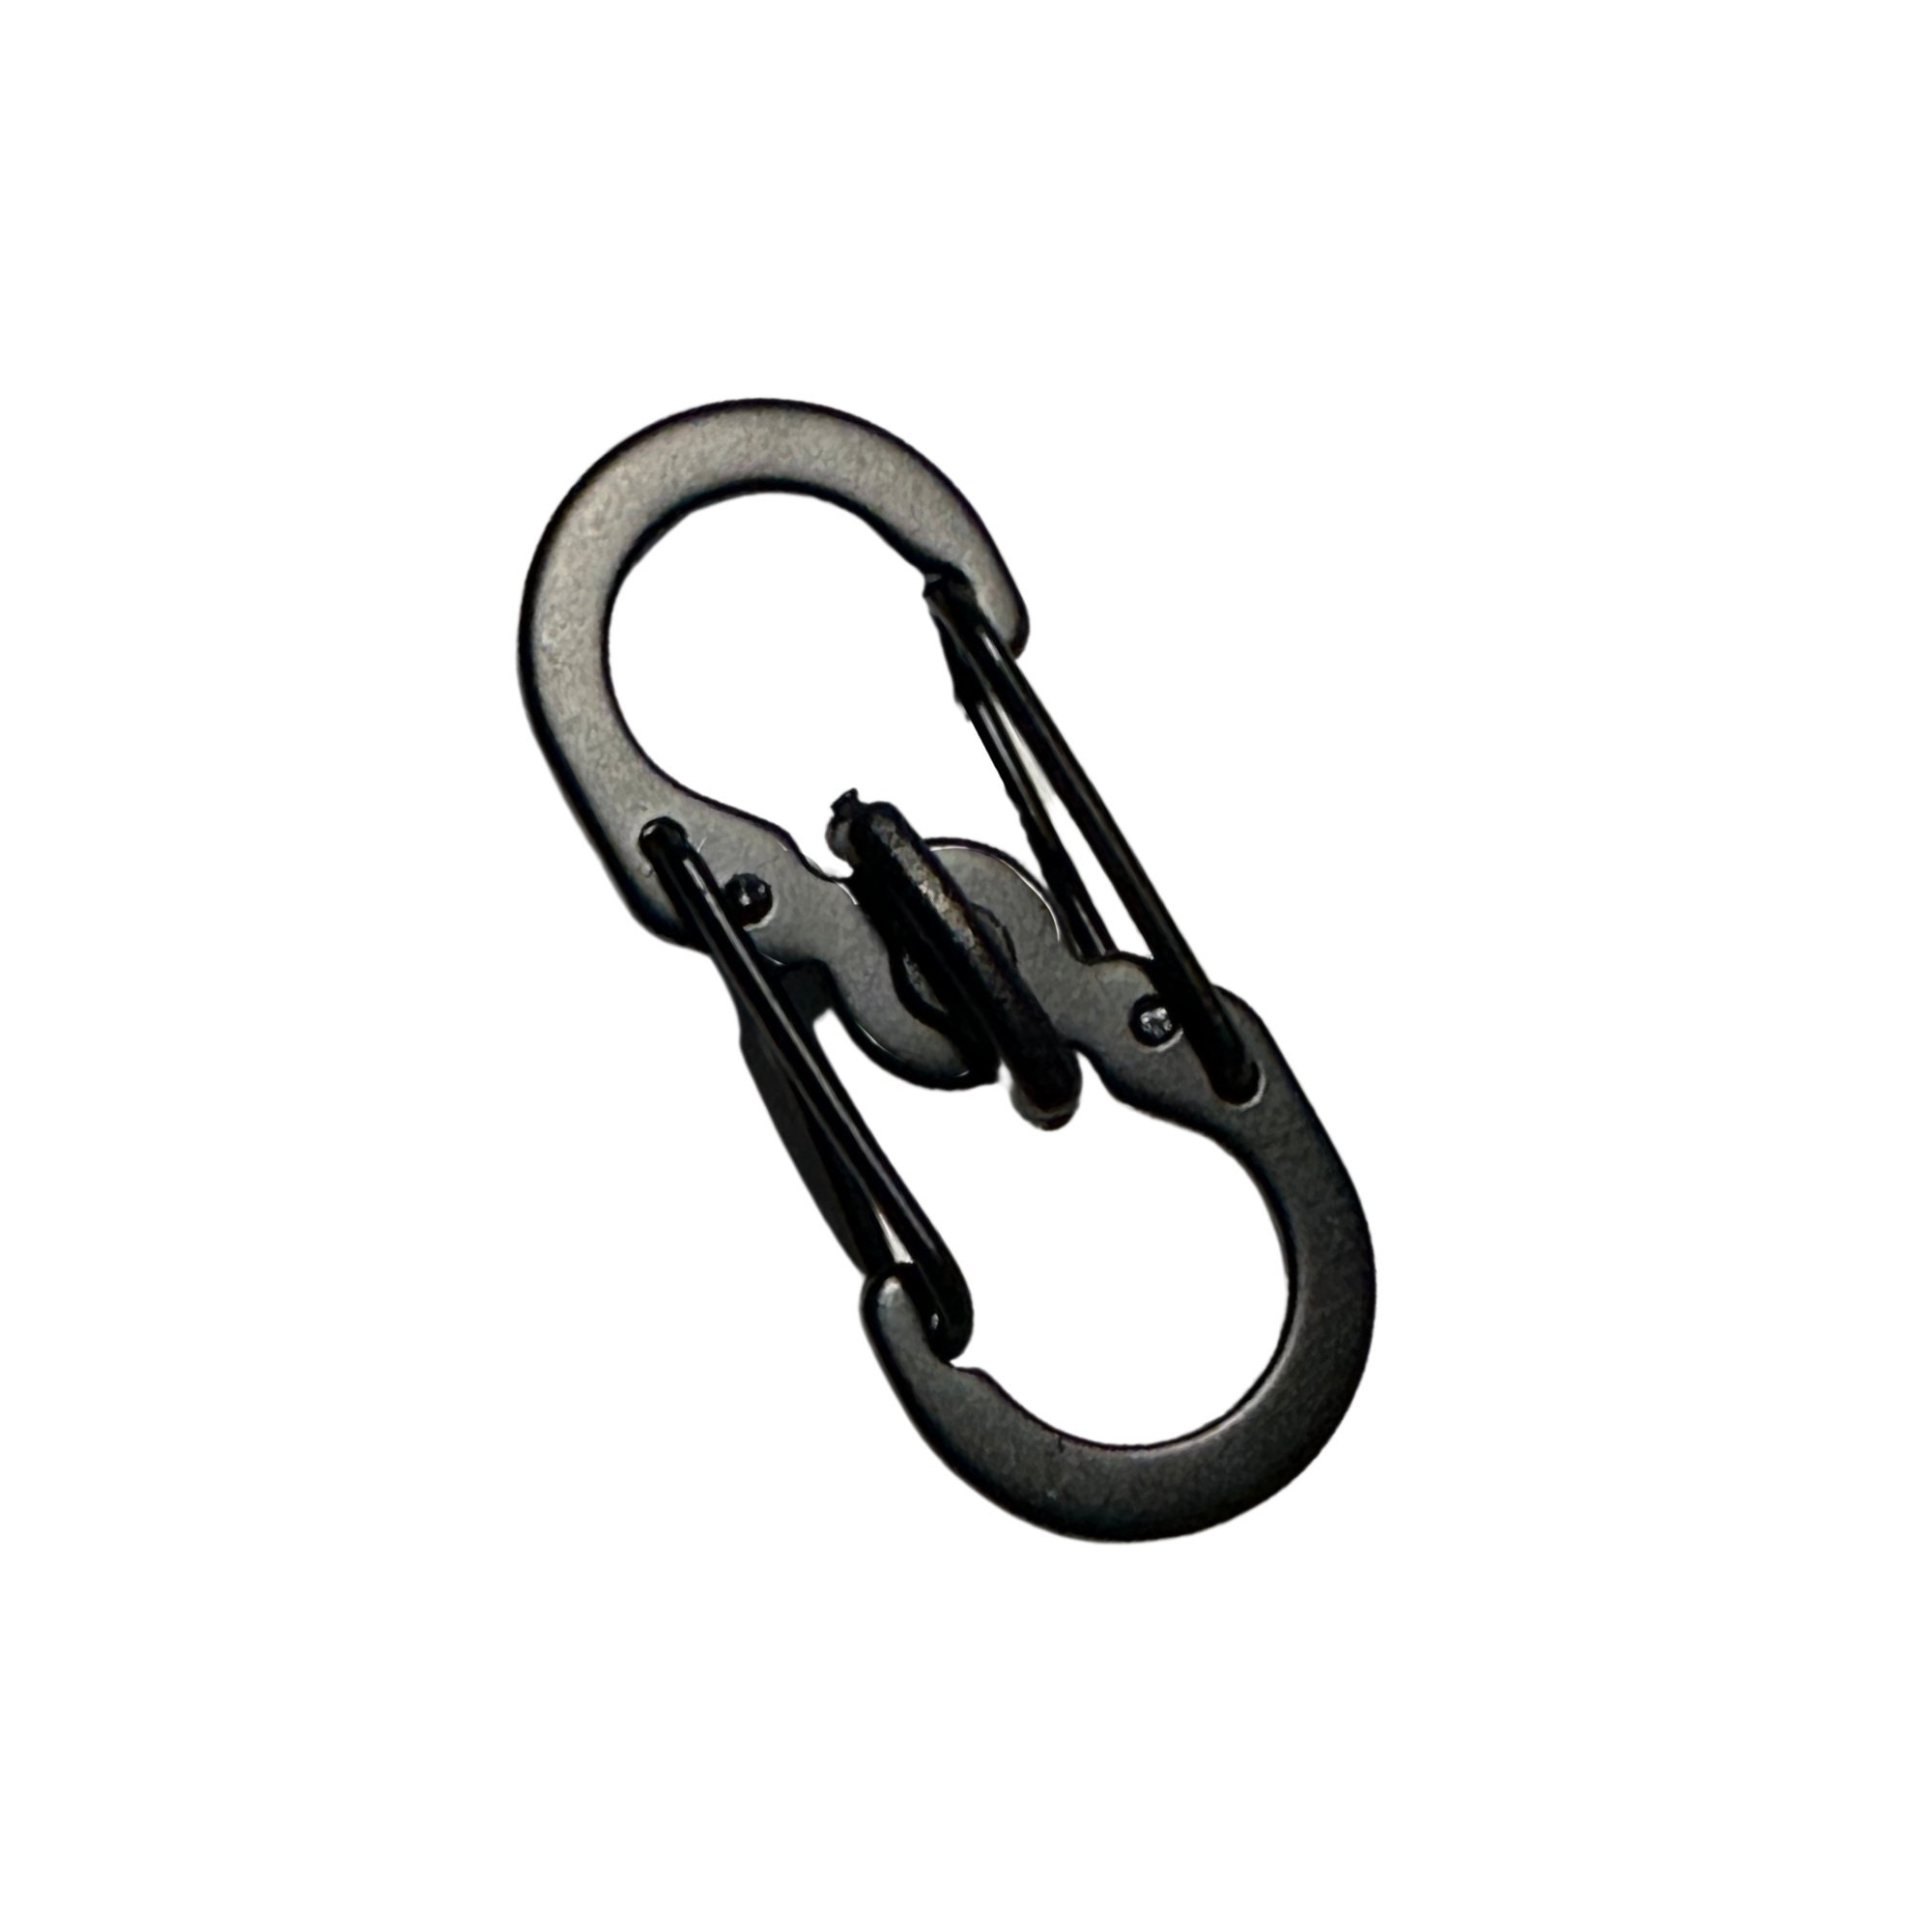 BLACK S SHAPED CARABINER CLIP, Small Plastic HEAVY DUTY Snap Hook Clips Key  Ring